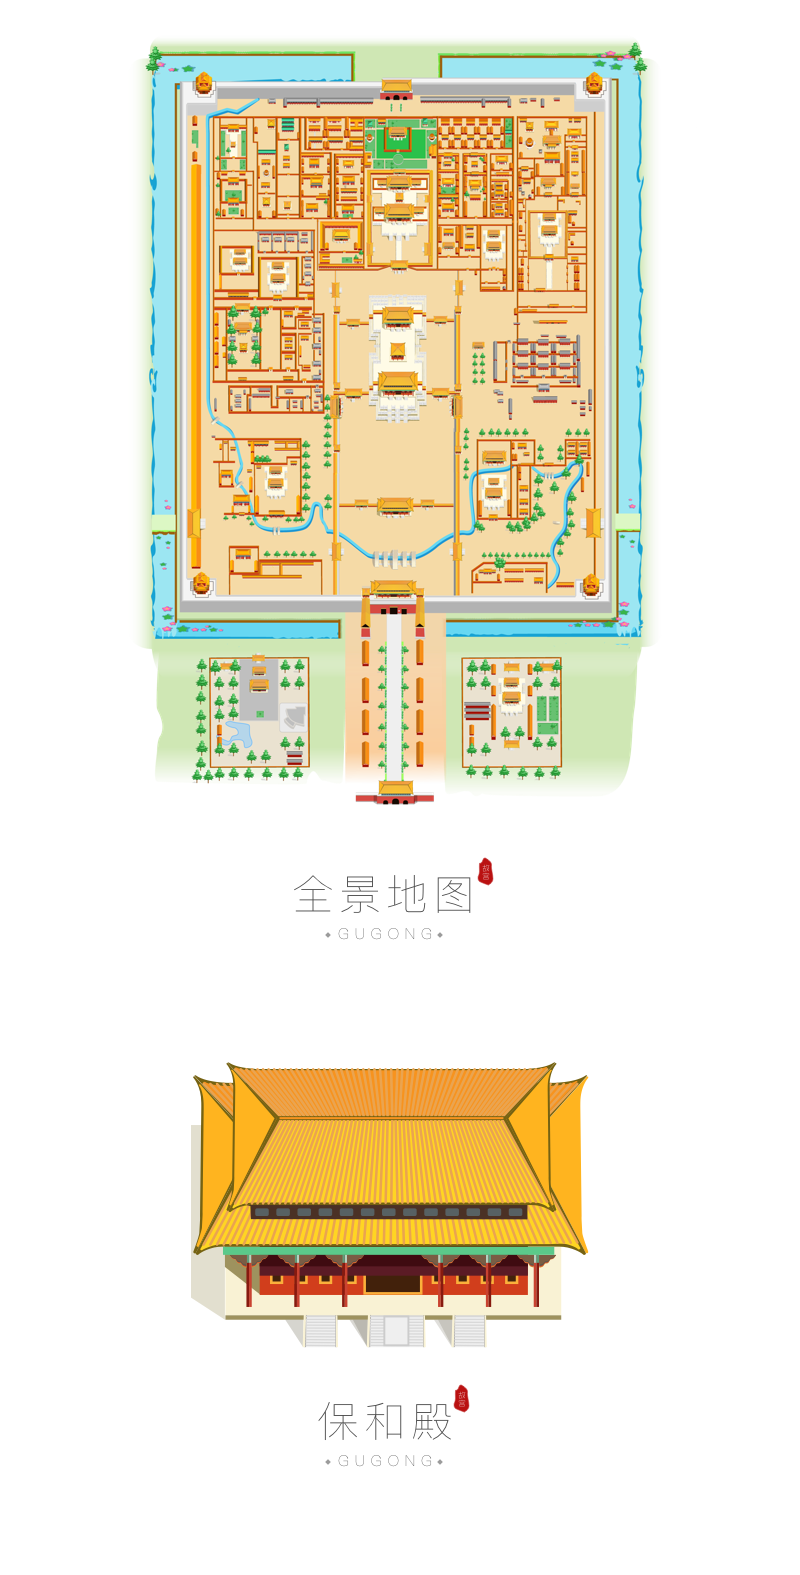 Forbidden City 故宫全景地图|插画习作|插画|us